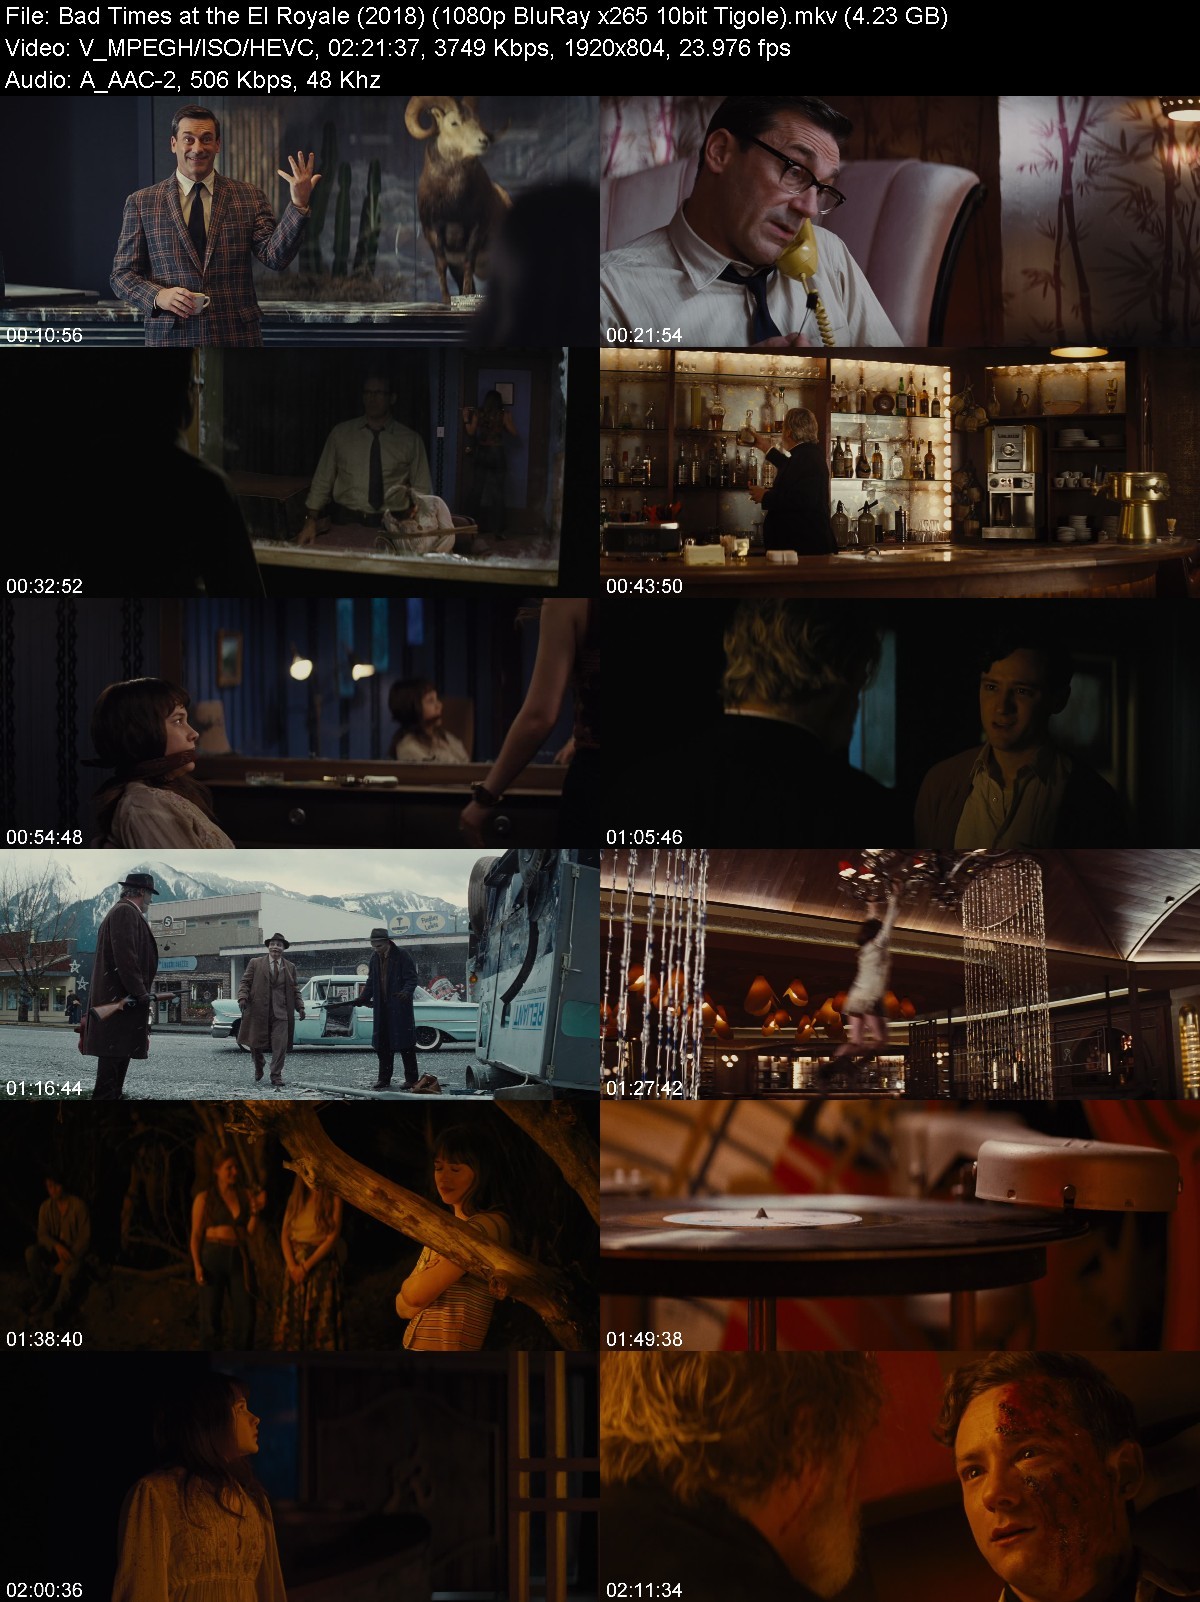 Bad Times at the El Royale (2018) 1080p BluRay x265 HEVC 10bit AAC 7.1 - Tigole